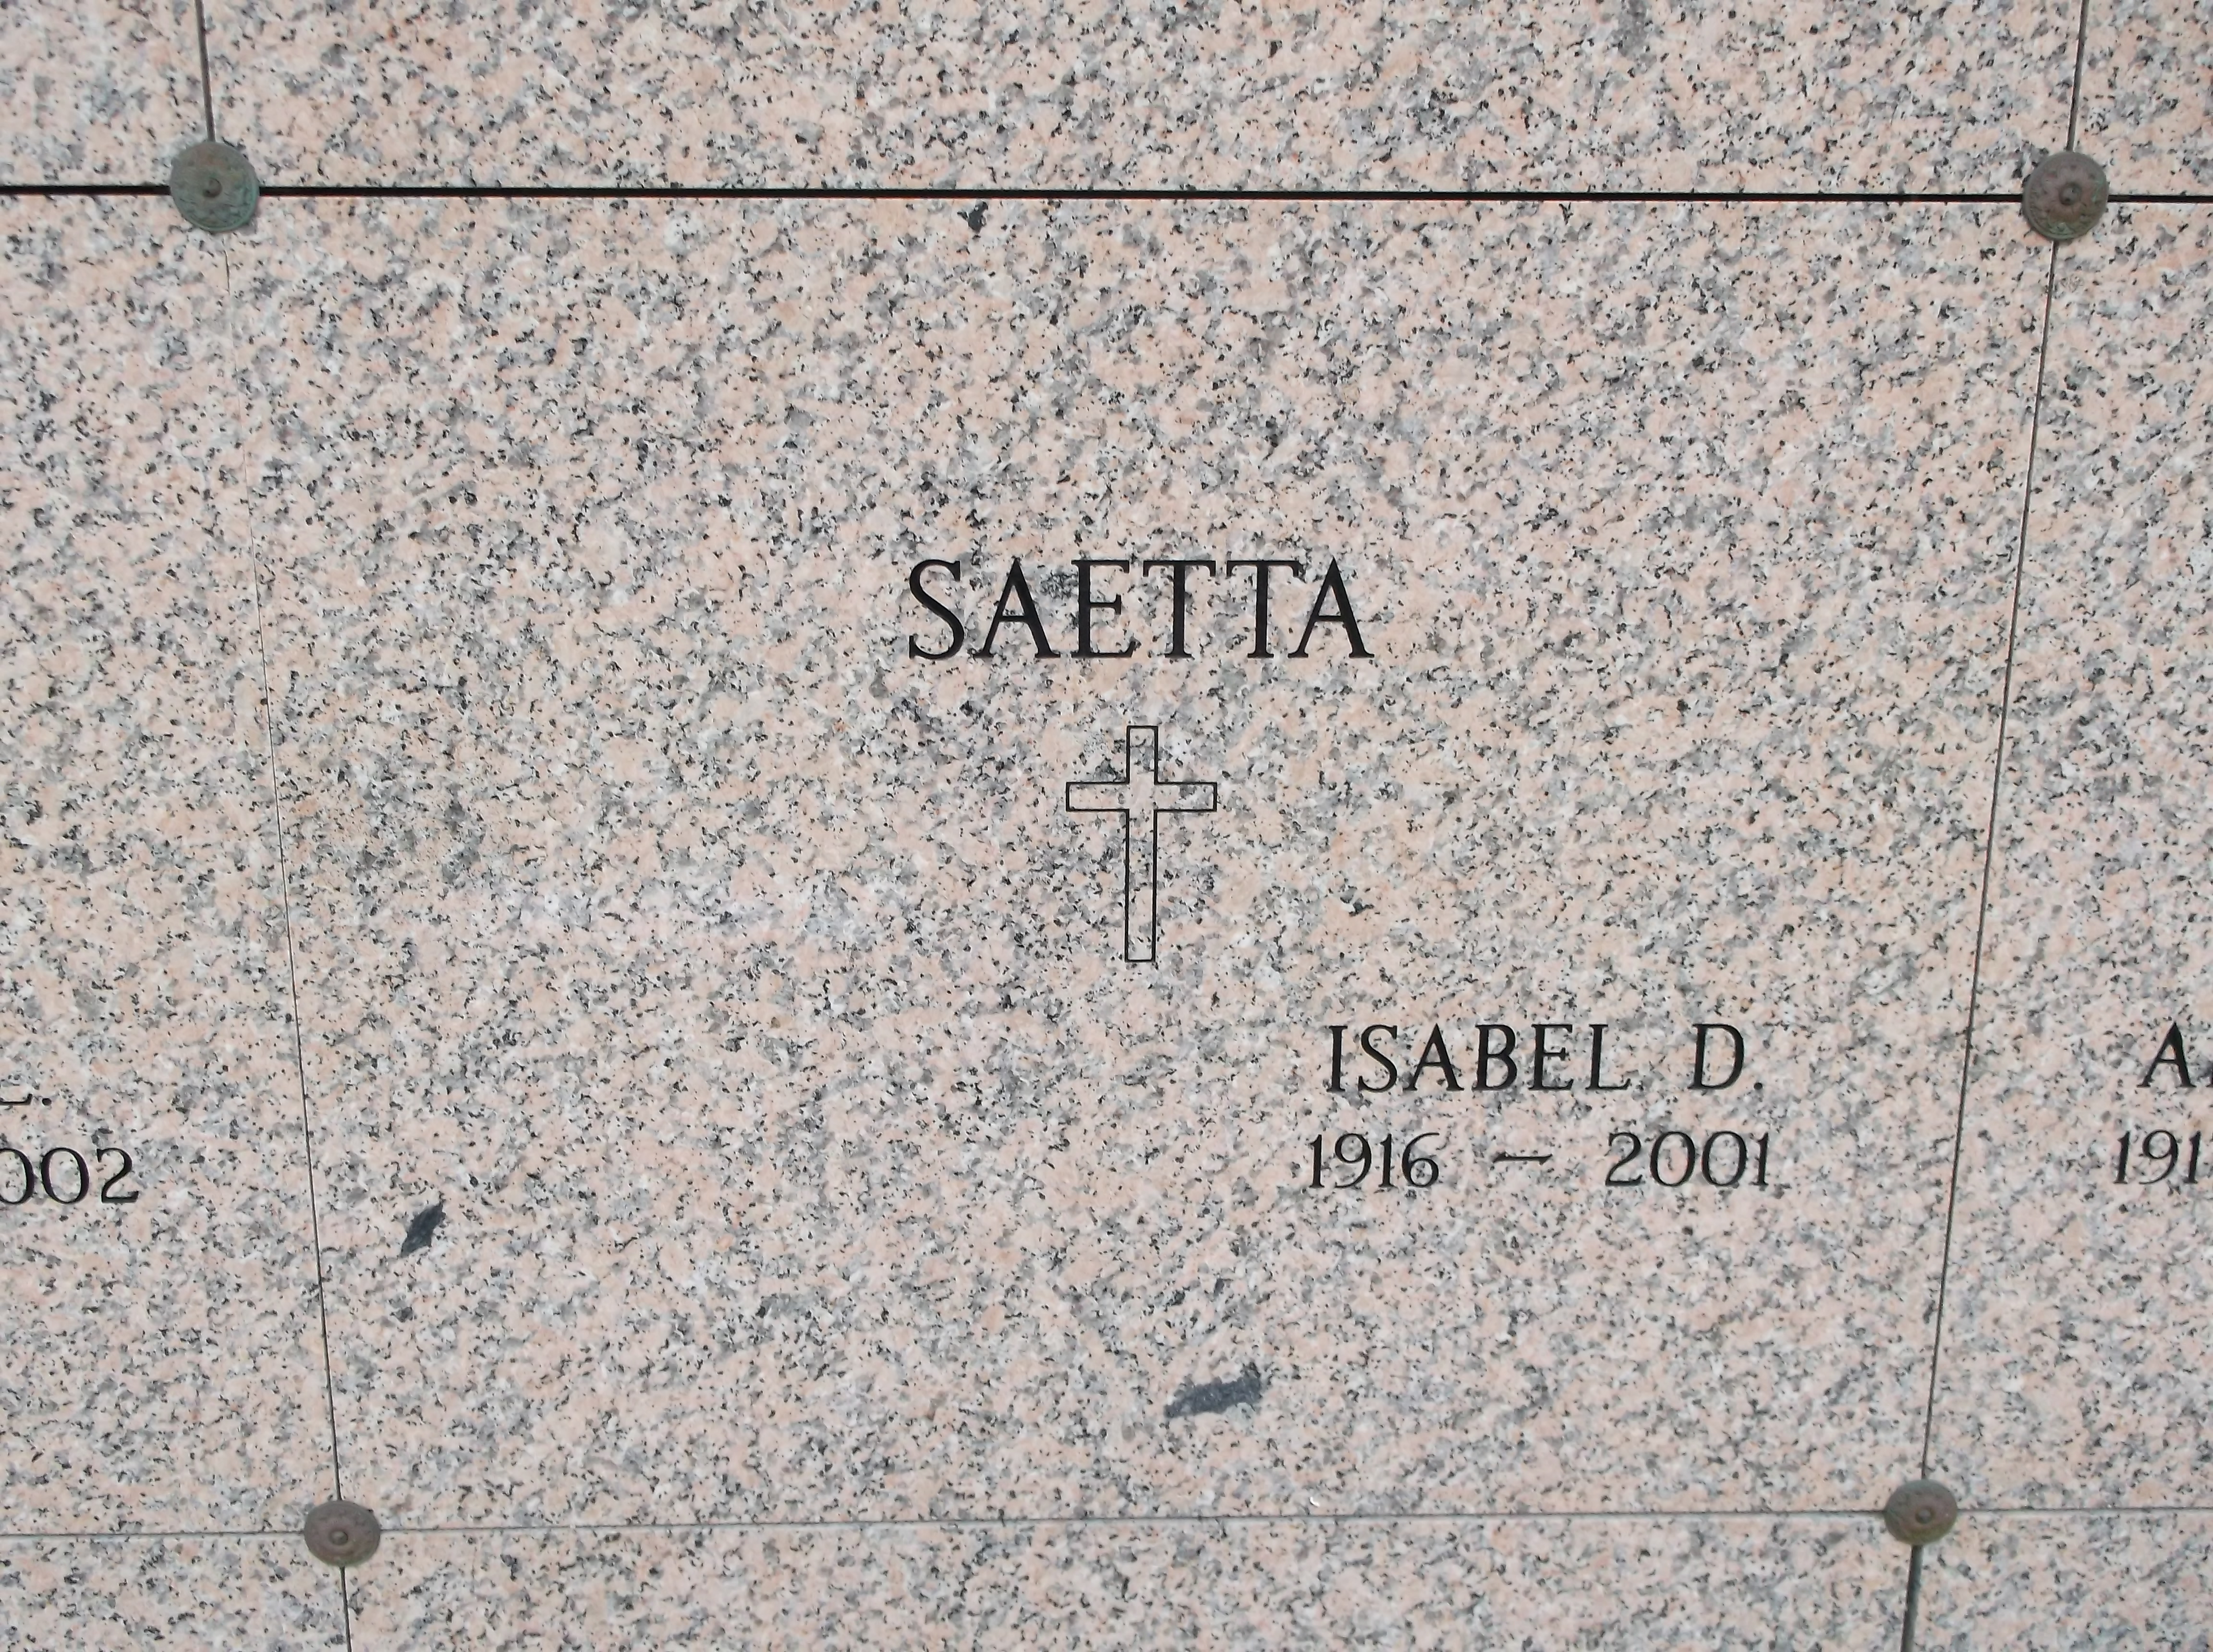 Isabel D Seatta